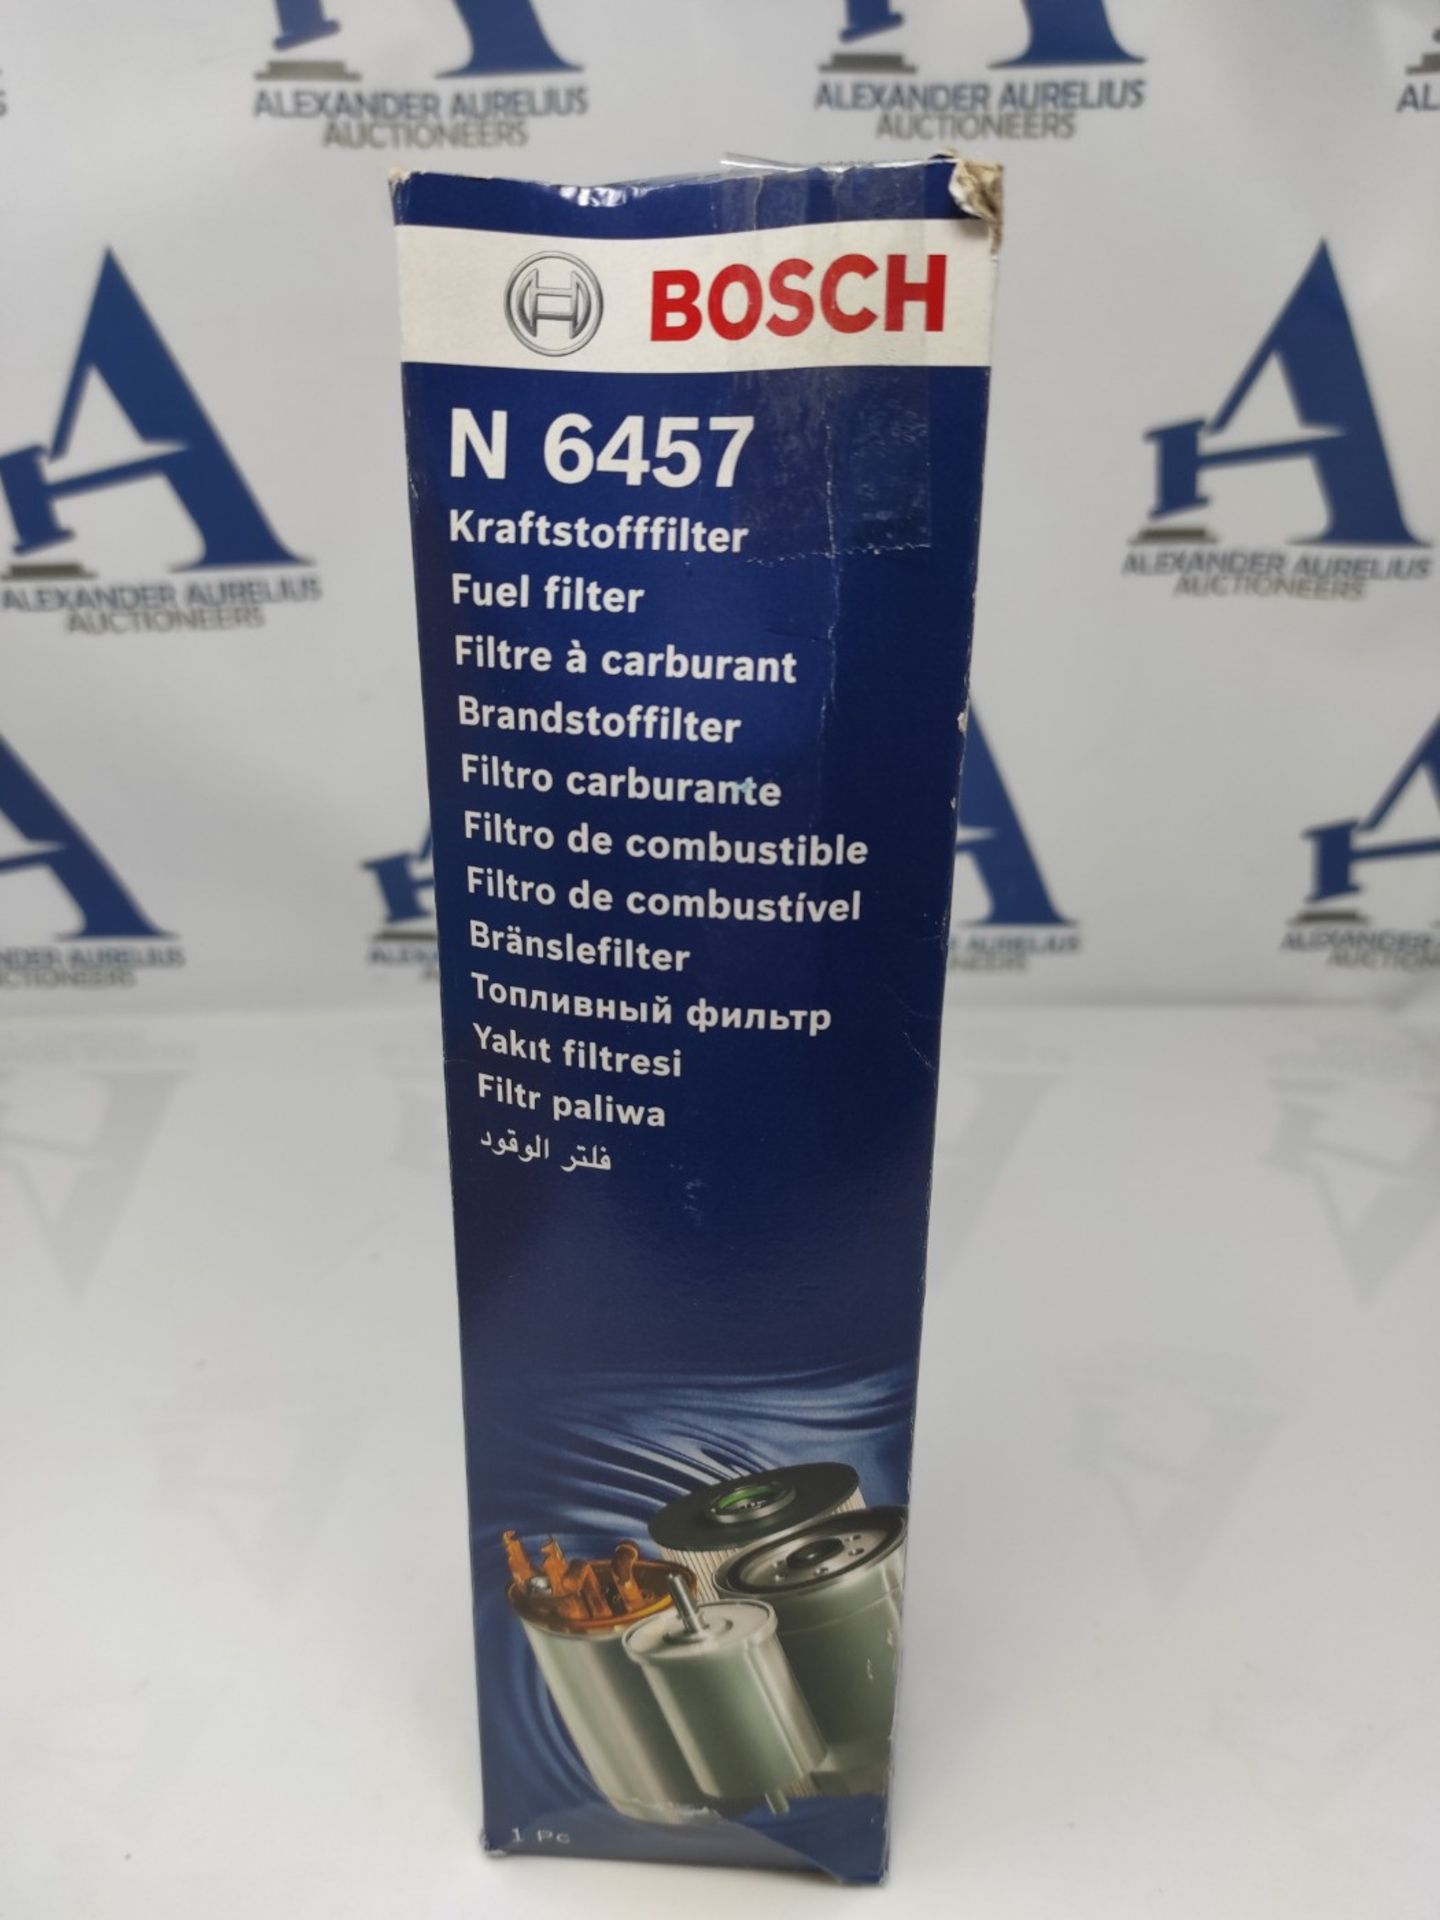 Bosch N6457 - Diesel Filter for Cars - Image 3 of 3